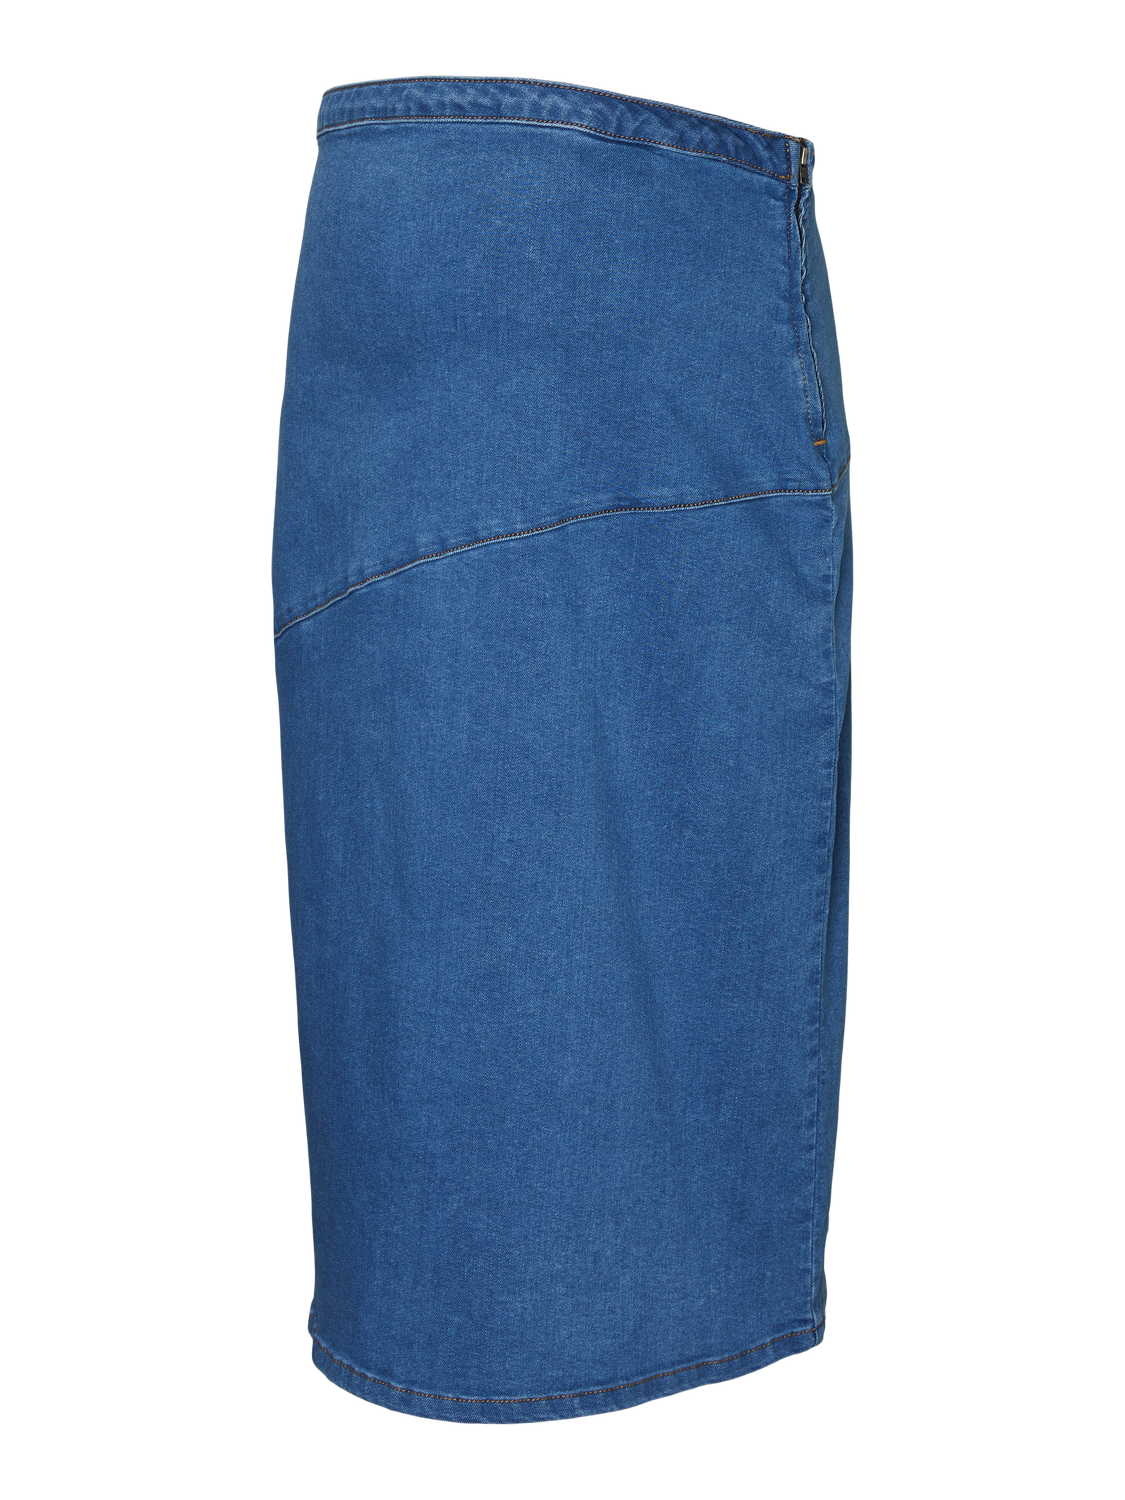 MAMA.LICIOUS Maternity-skirt -Medium Blue Denim - 20020021